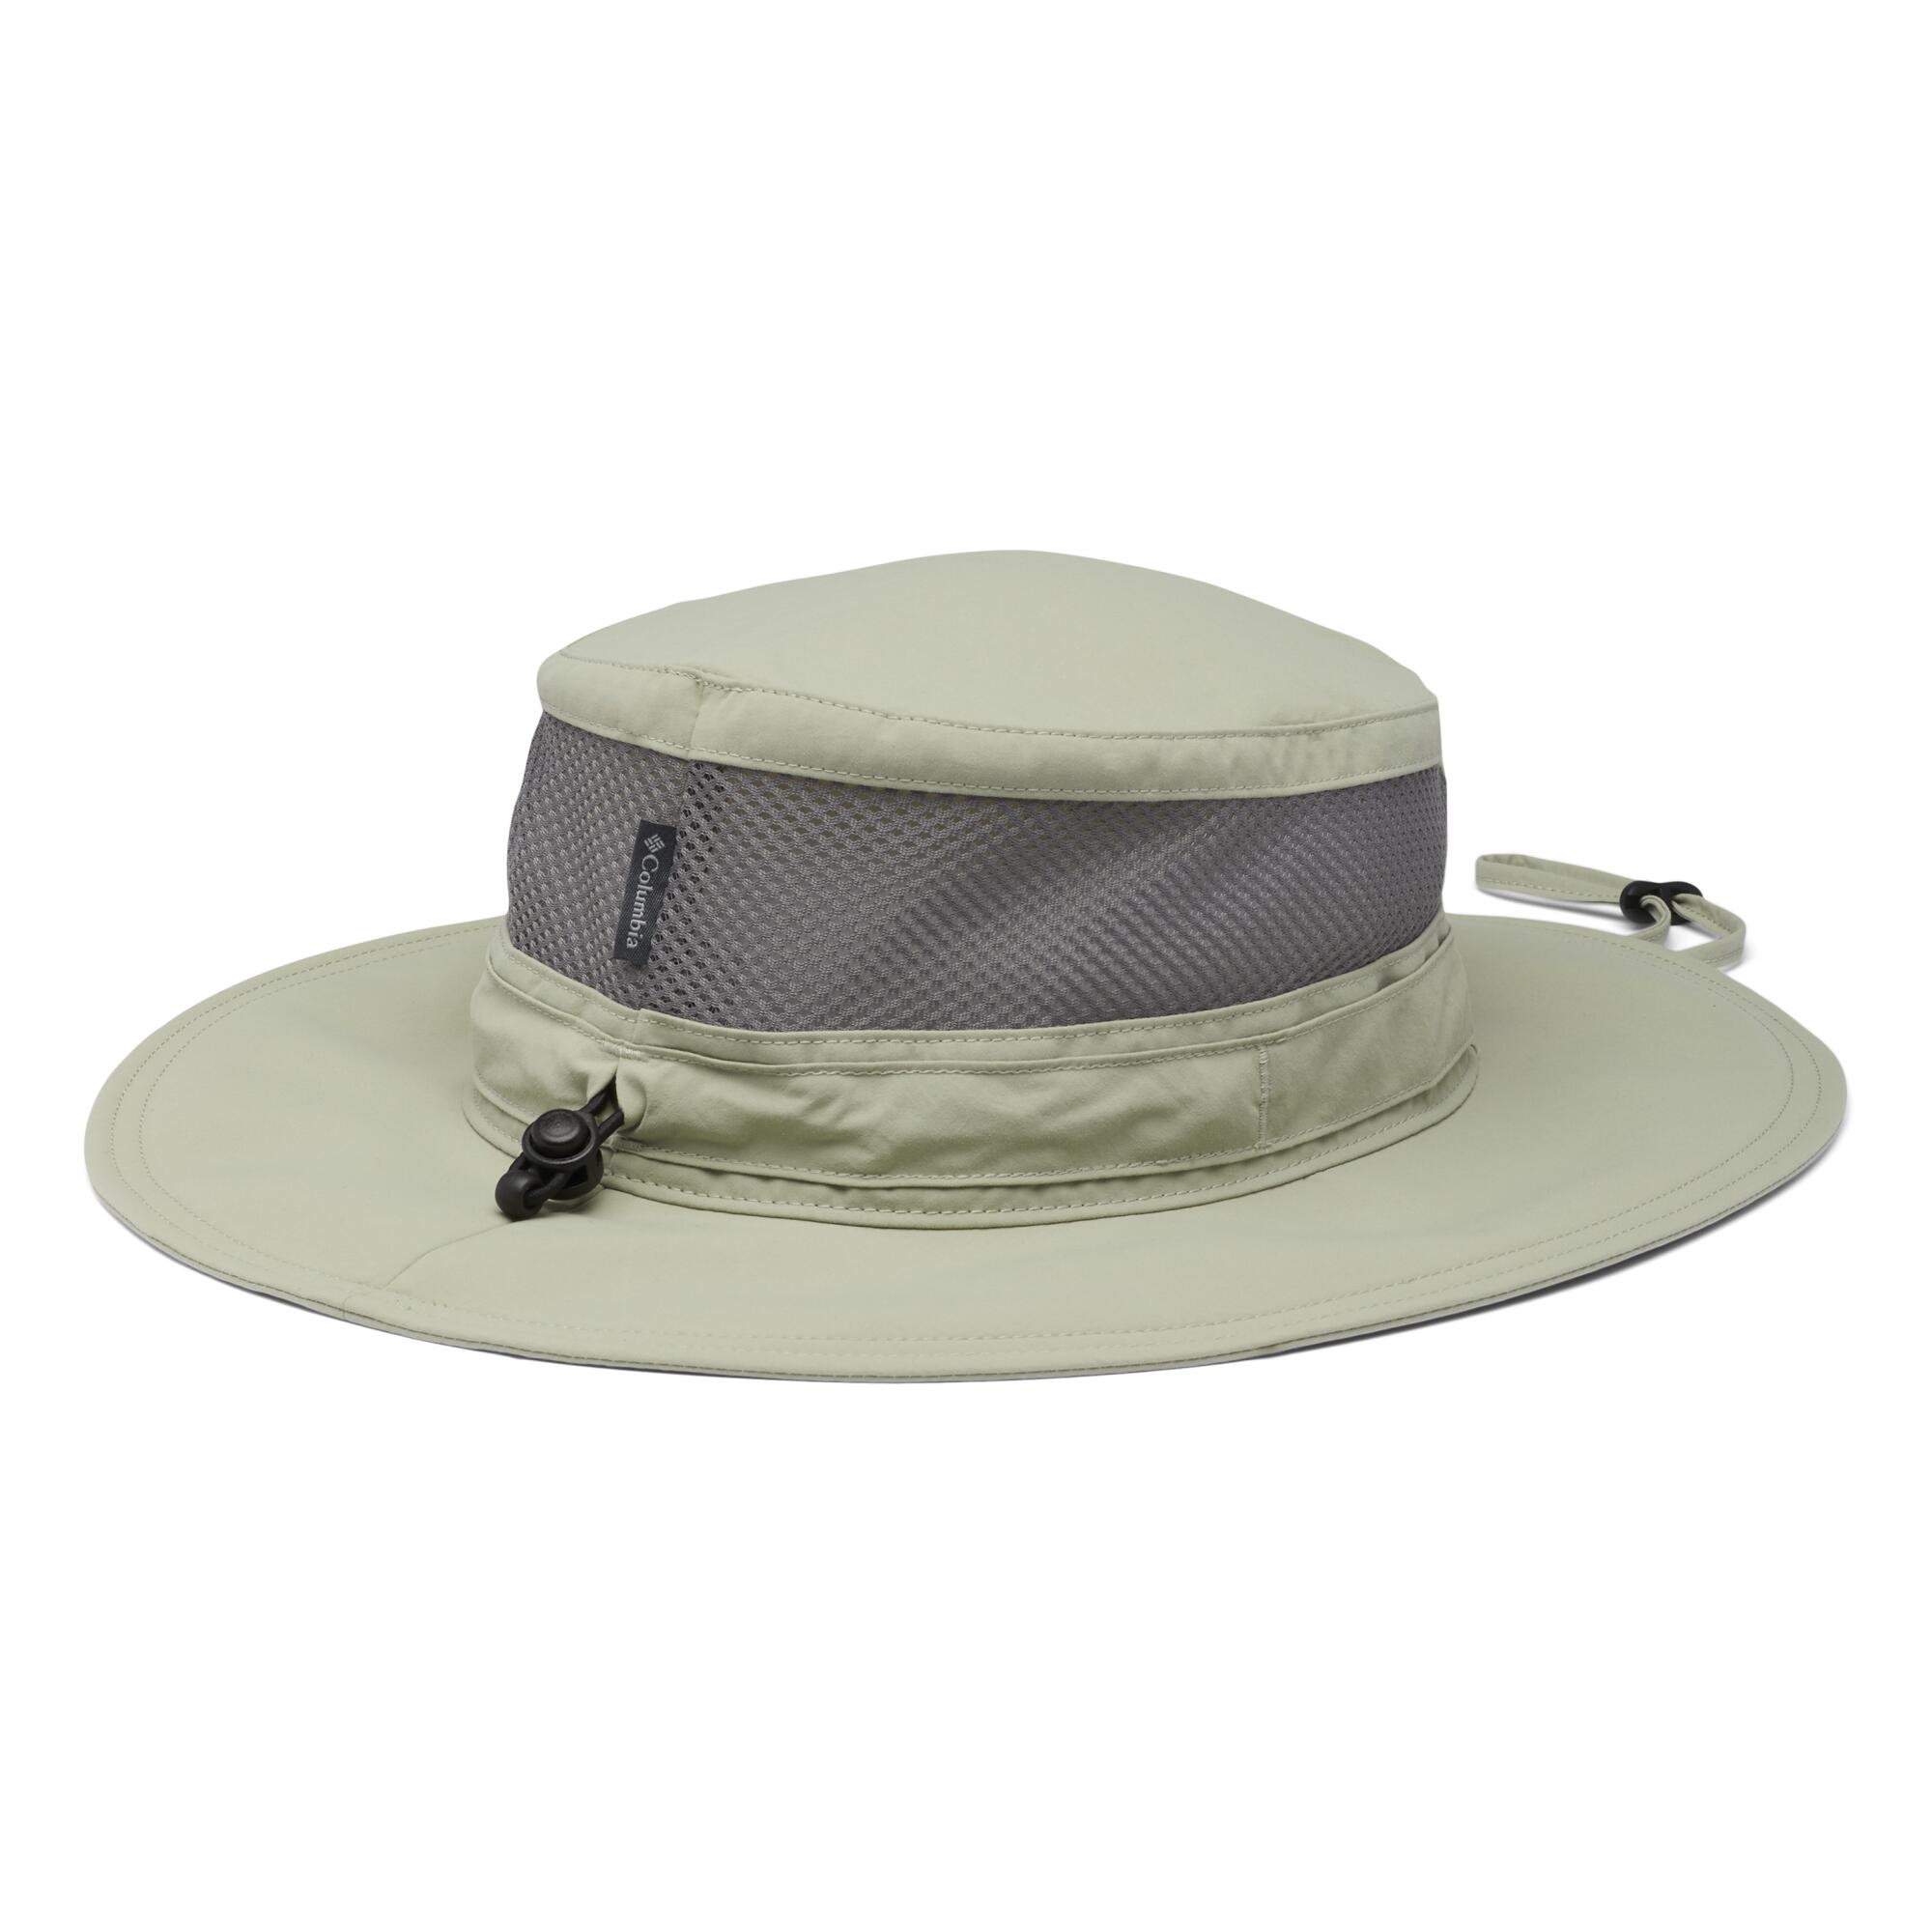 A safari hat by Columbia 